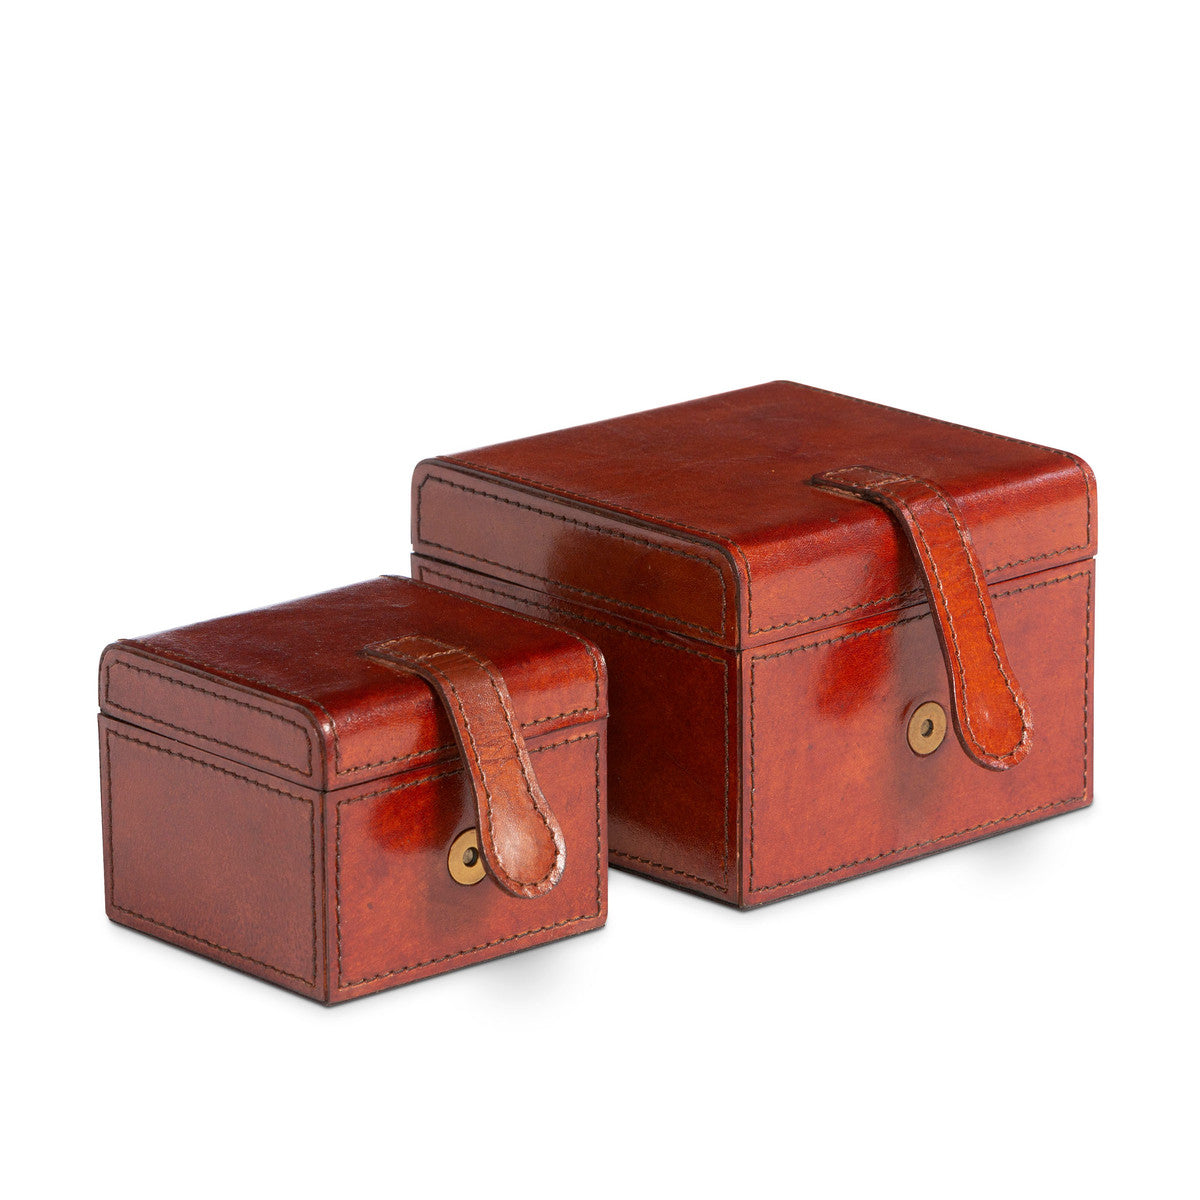 Leather Valet Storage Boxes - Set of 2